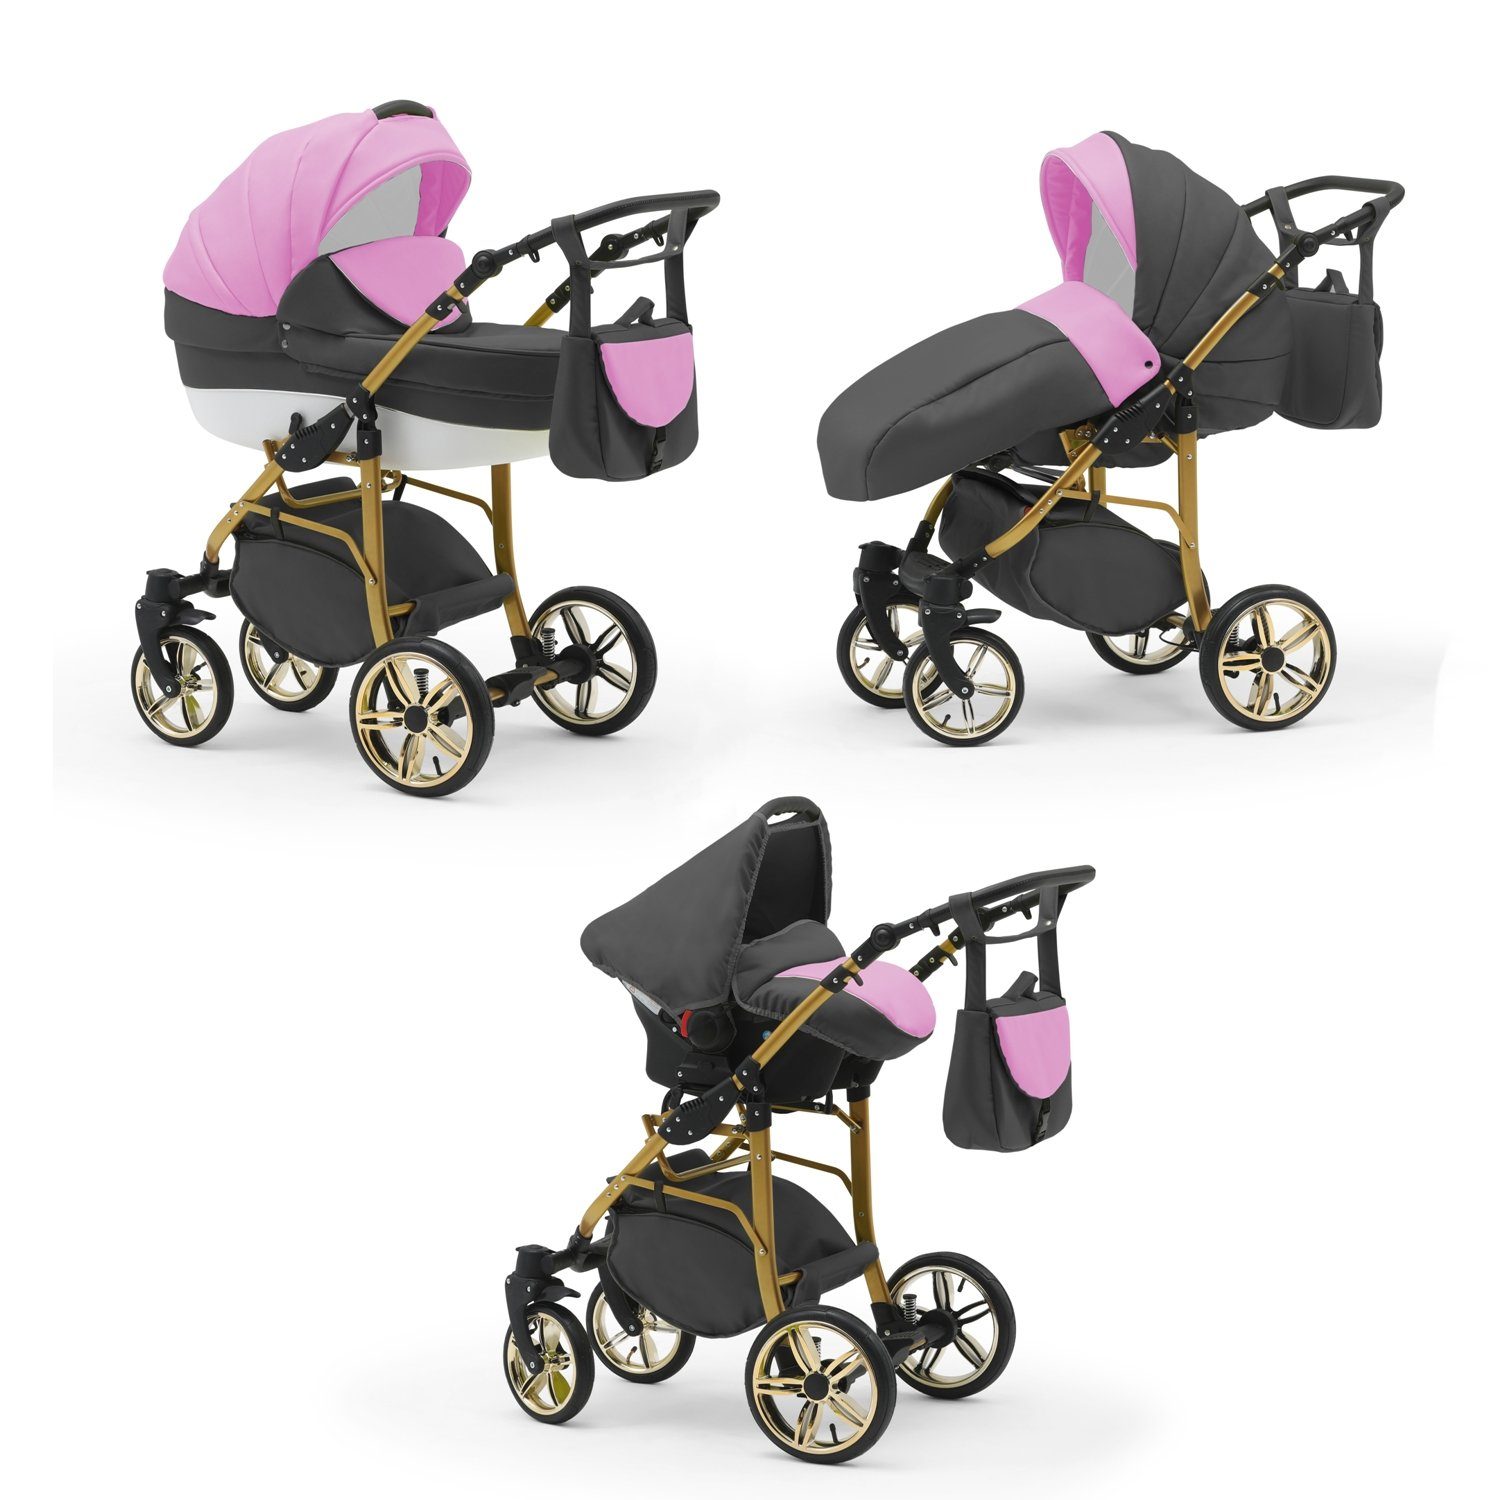 babies-on-wheels Kombi-Kinderwagen Cosmo Pink-Weiß-Grau 16 1 46 Gold- Farben Teile in in 3 Kinderwagen-Set 